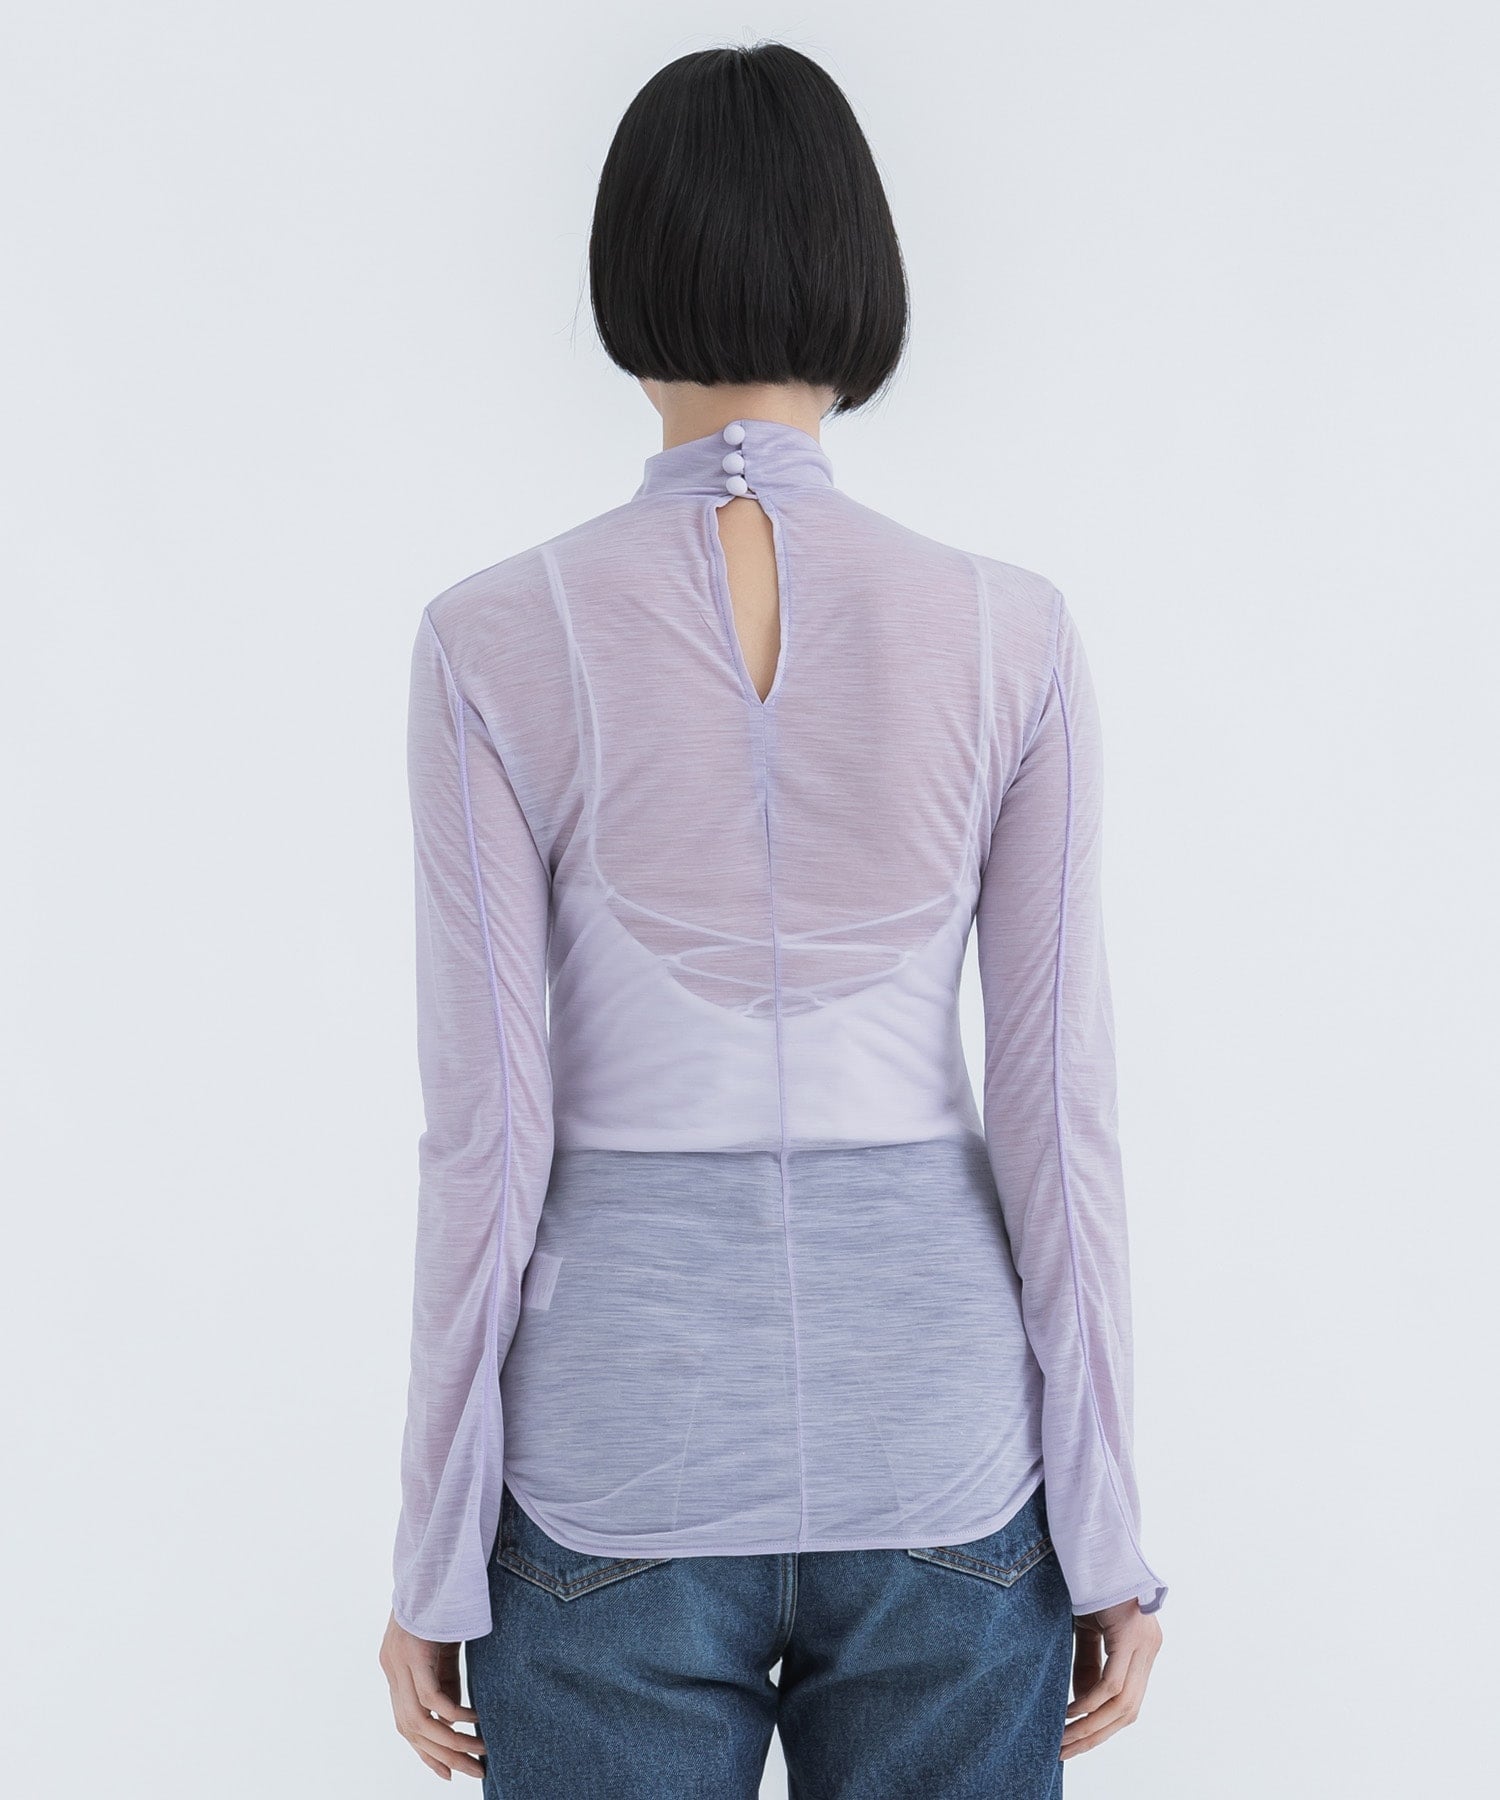 Hybrid Yarn Wool Jersey High Neck Top(2 PURPLE): Mame Kurogouchi 